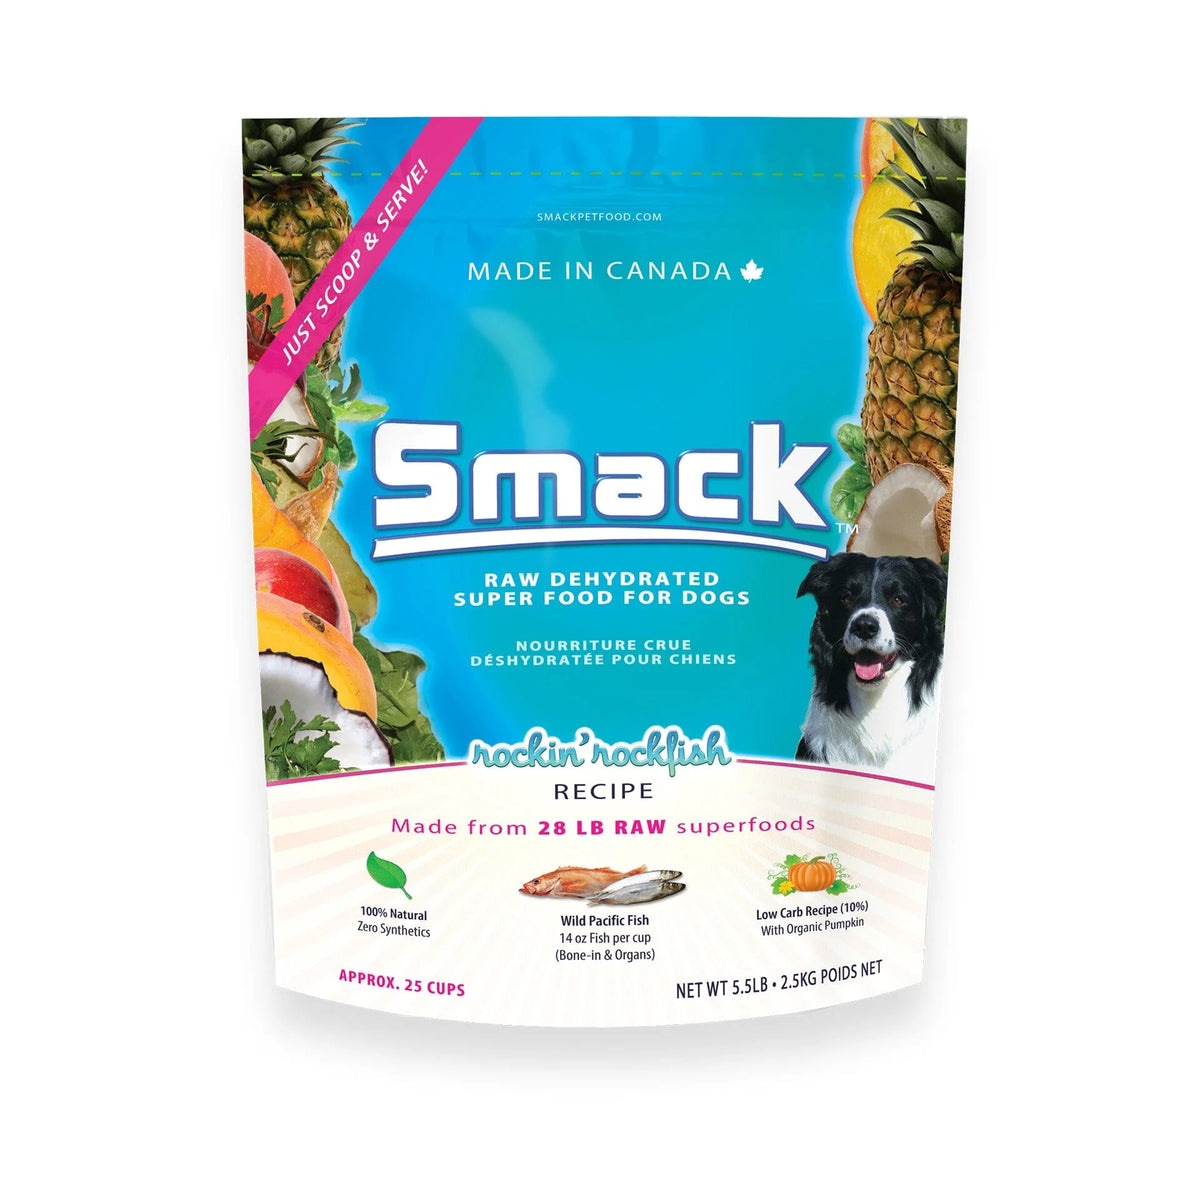 Smack: Rockin' Rockfish Dog Food